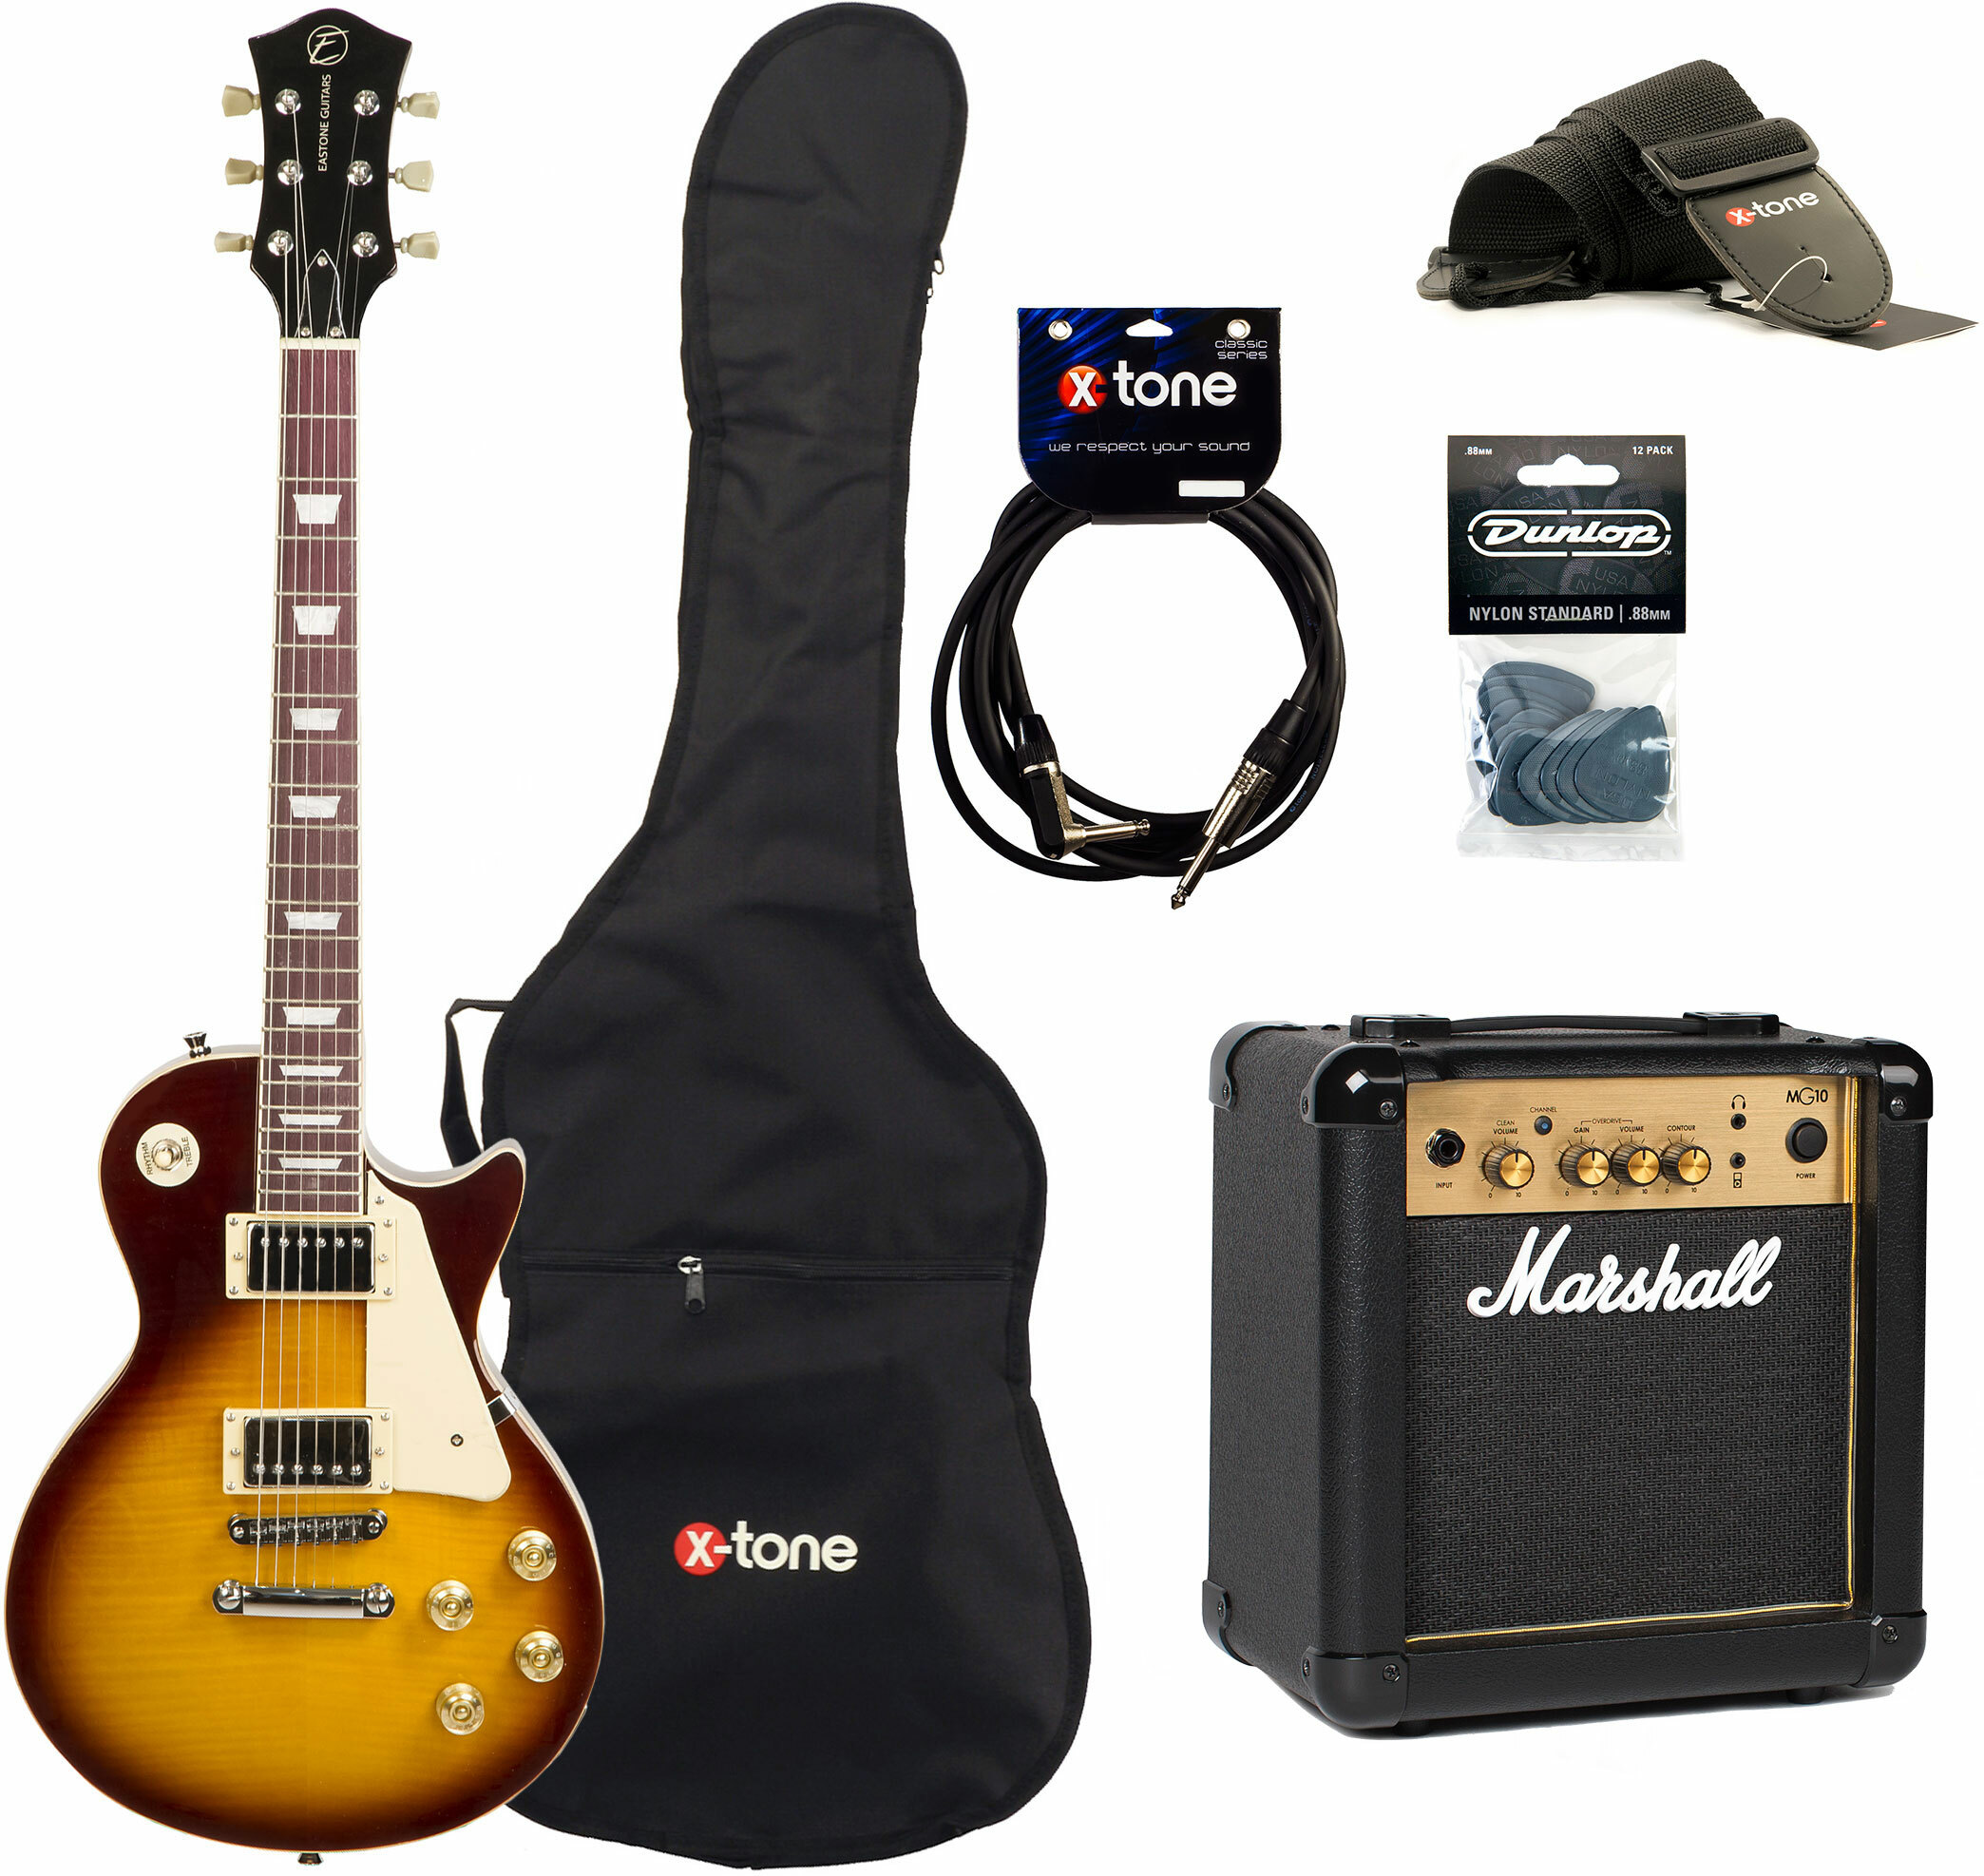 Eastone Lp200 Hb +marshall Mg10 10w +cable +mediators +housse - Honey Sunburst - Electric guitar set - Main picture